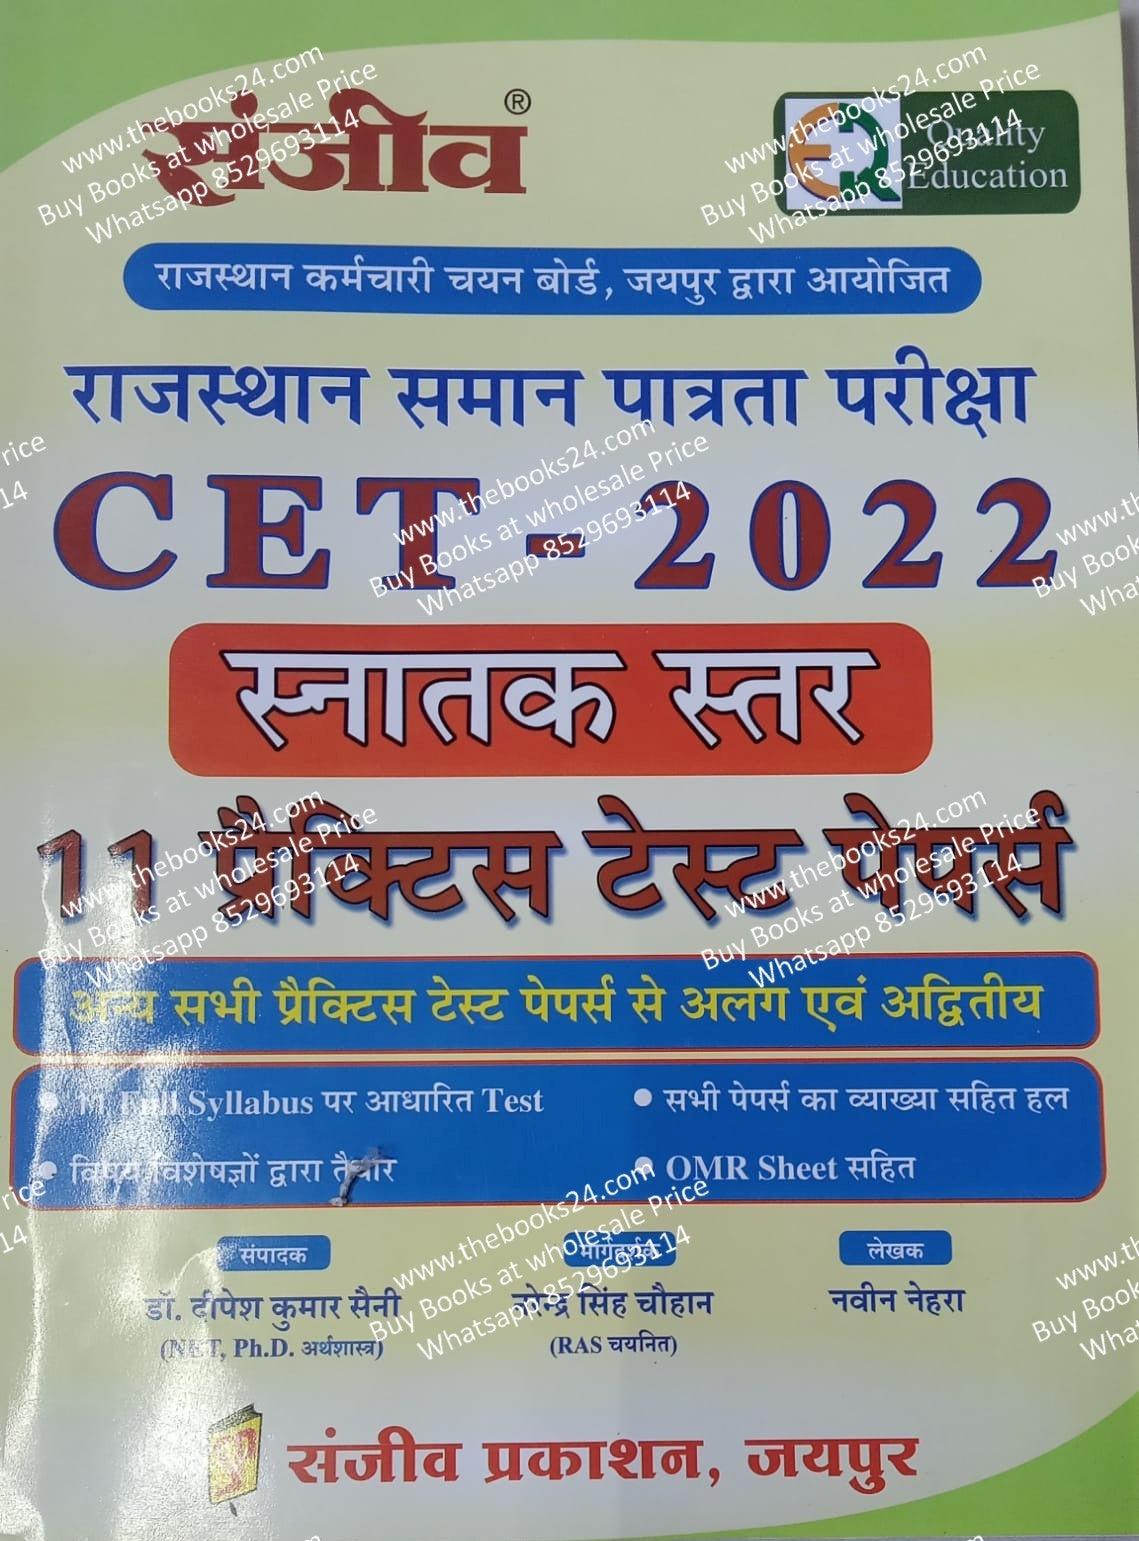 Sanjeev CET 2022 snatak star 11 practice test paper